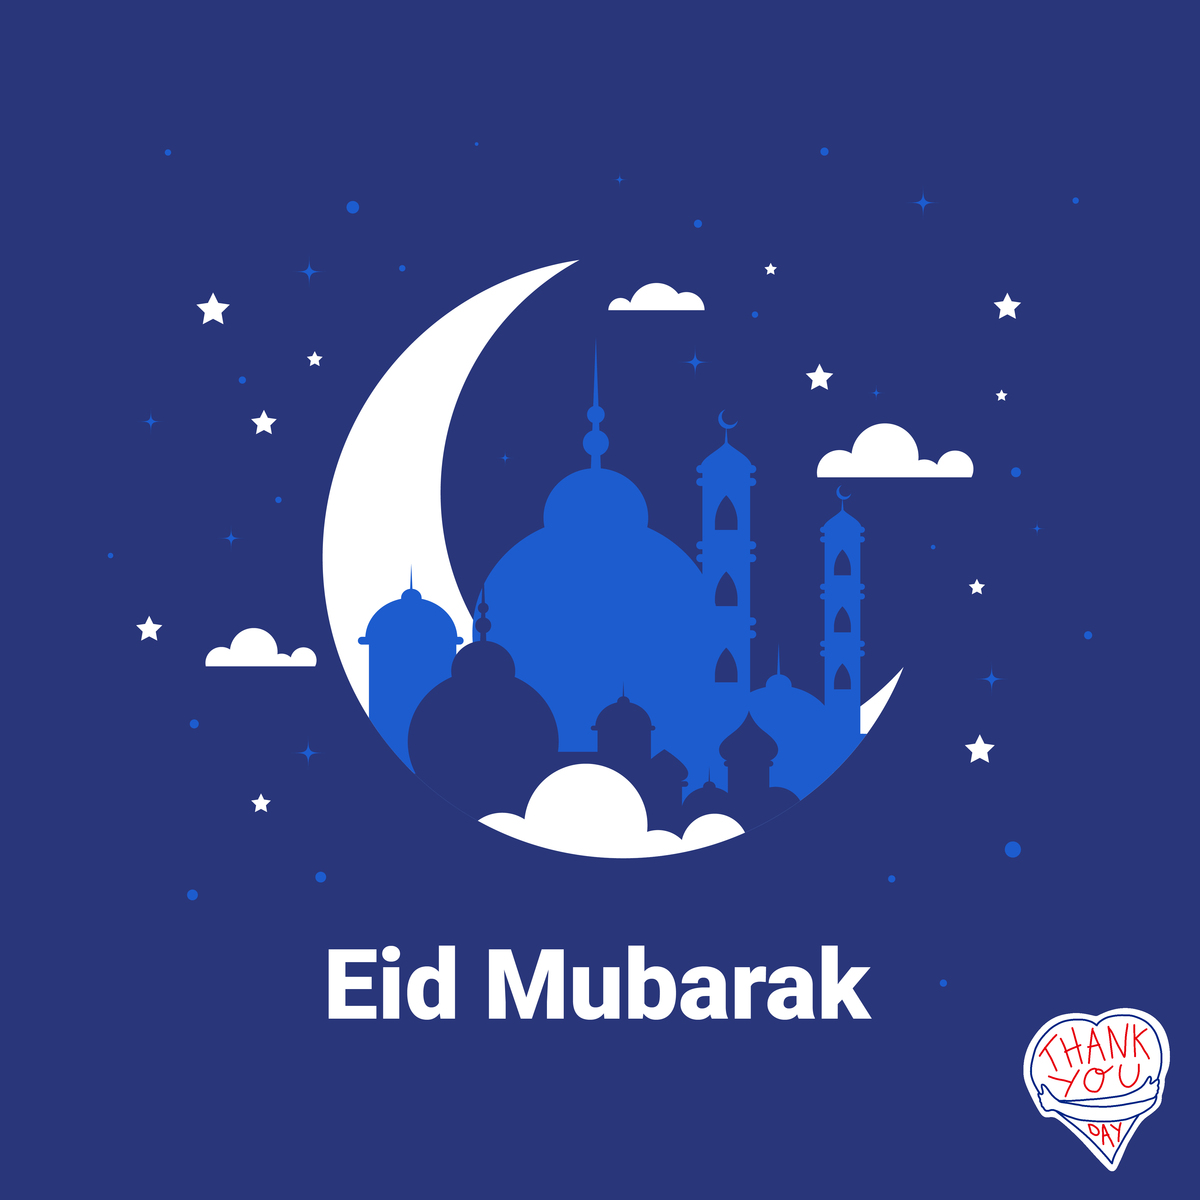 #EidMubark to everyone celebrating around the world 🌙